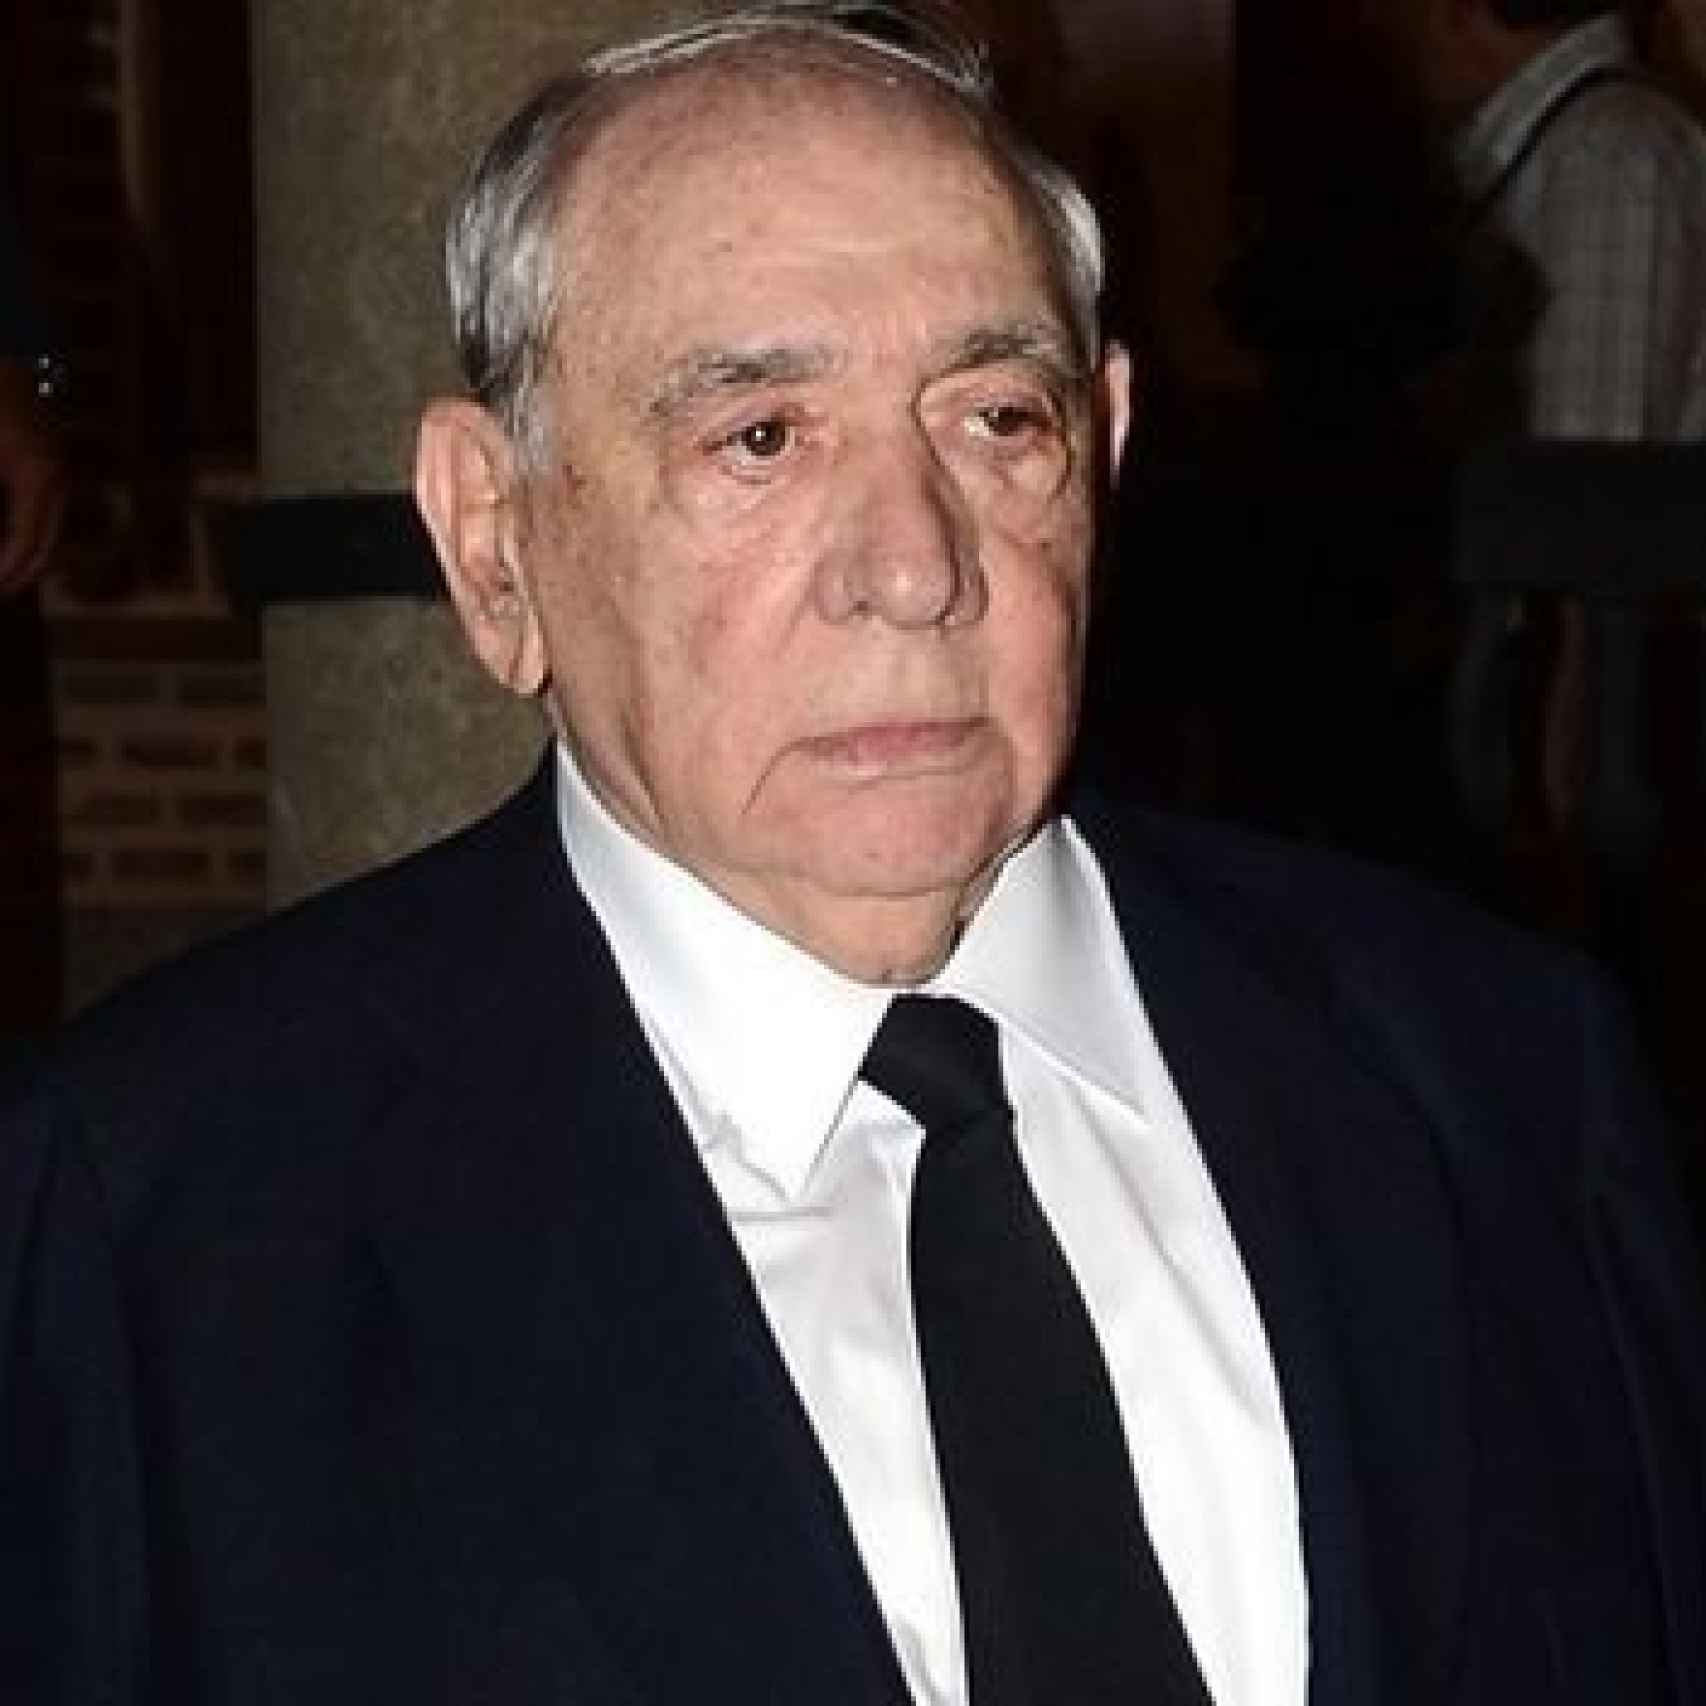 Isidoro Álvarez era fiel a la camisa blanca y la corbata negra